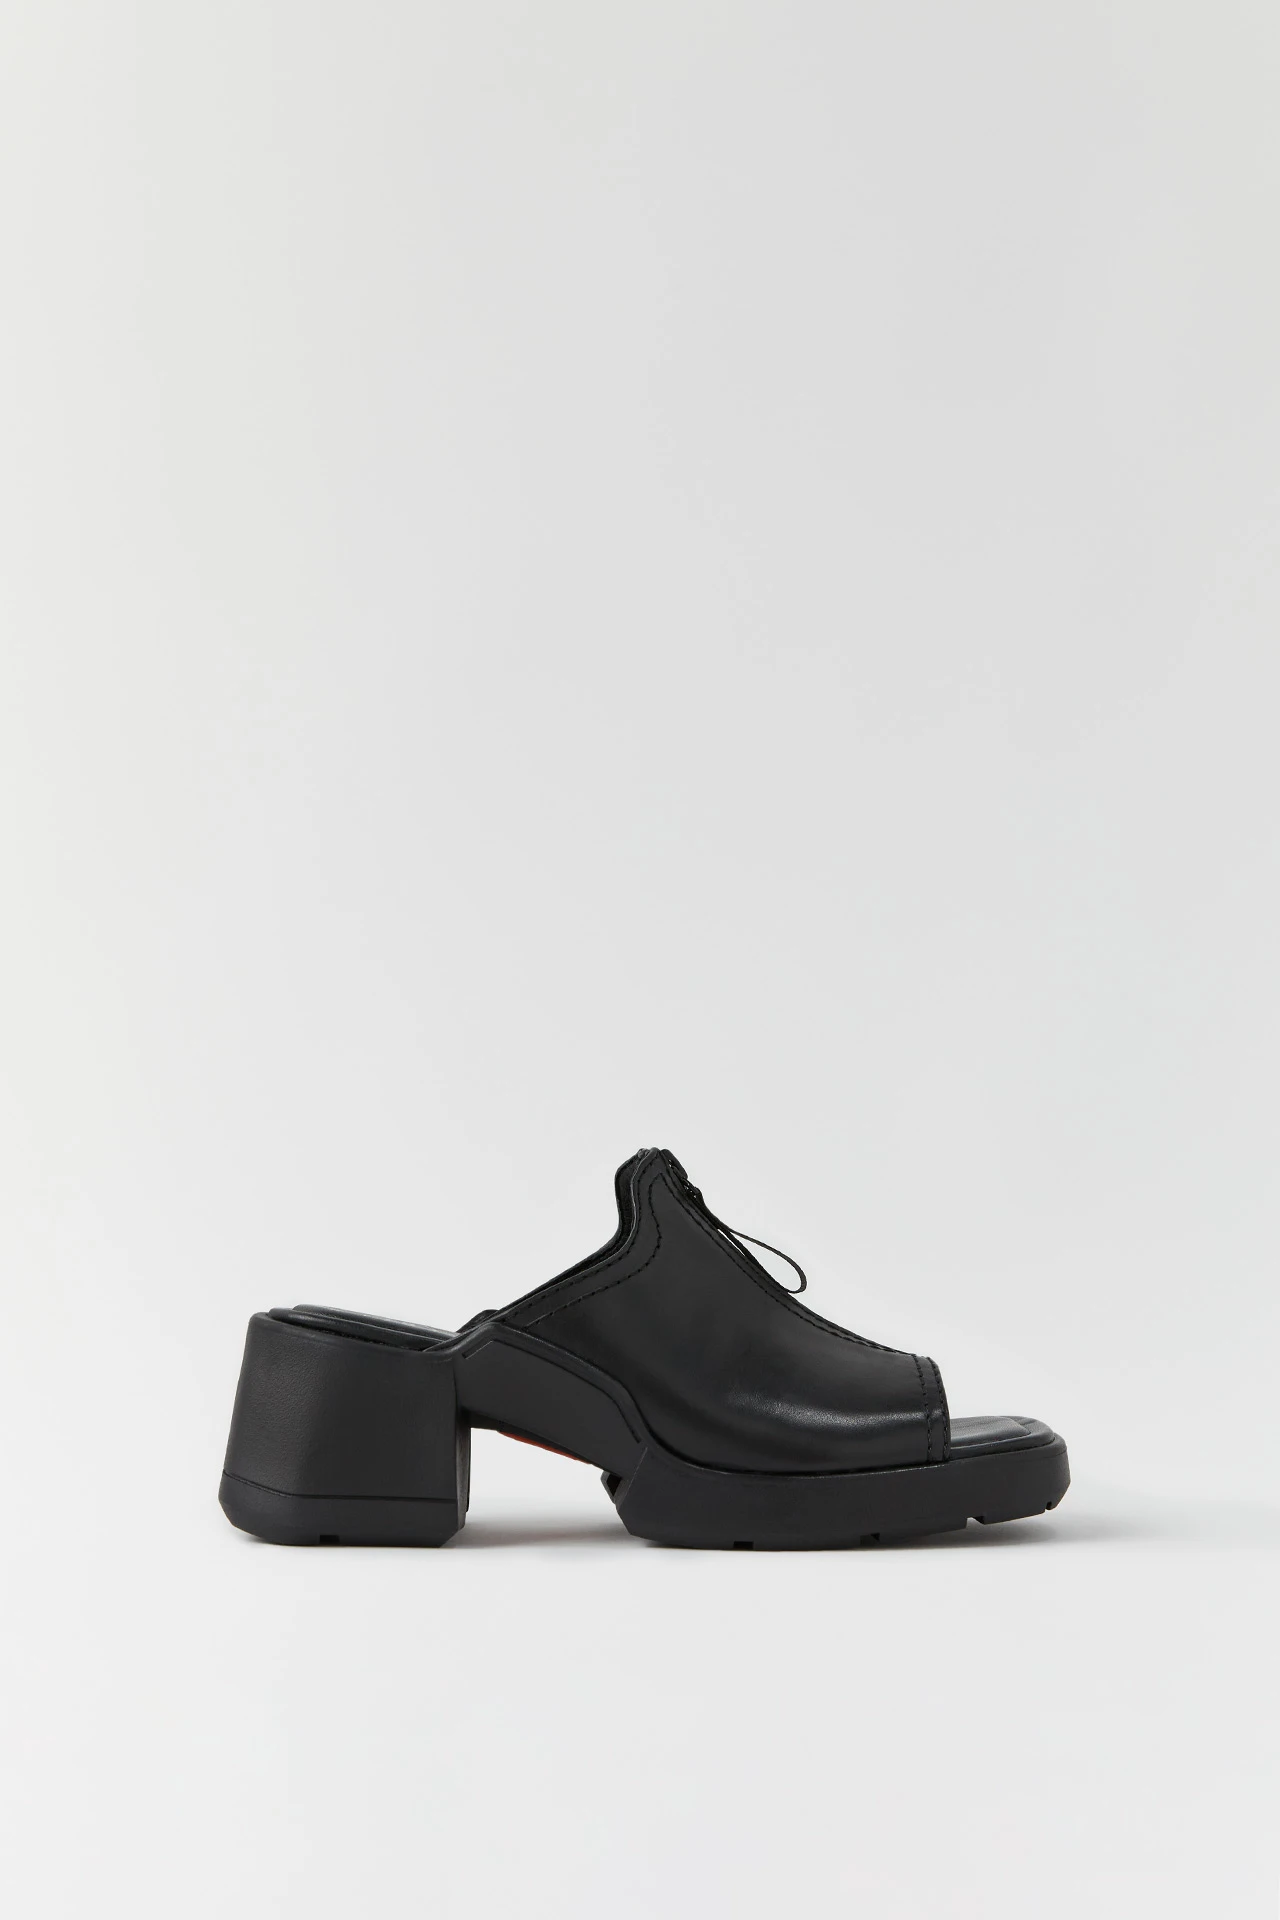 E8-bertie-black-sandals-01